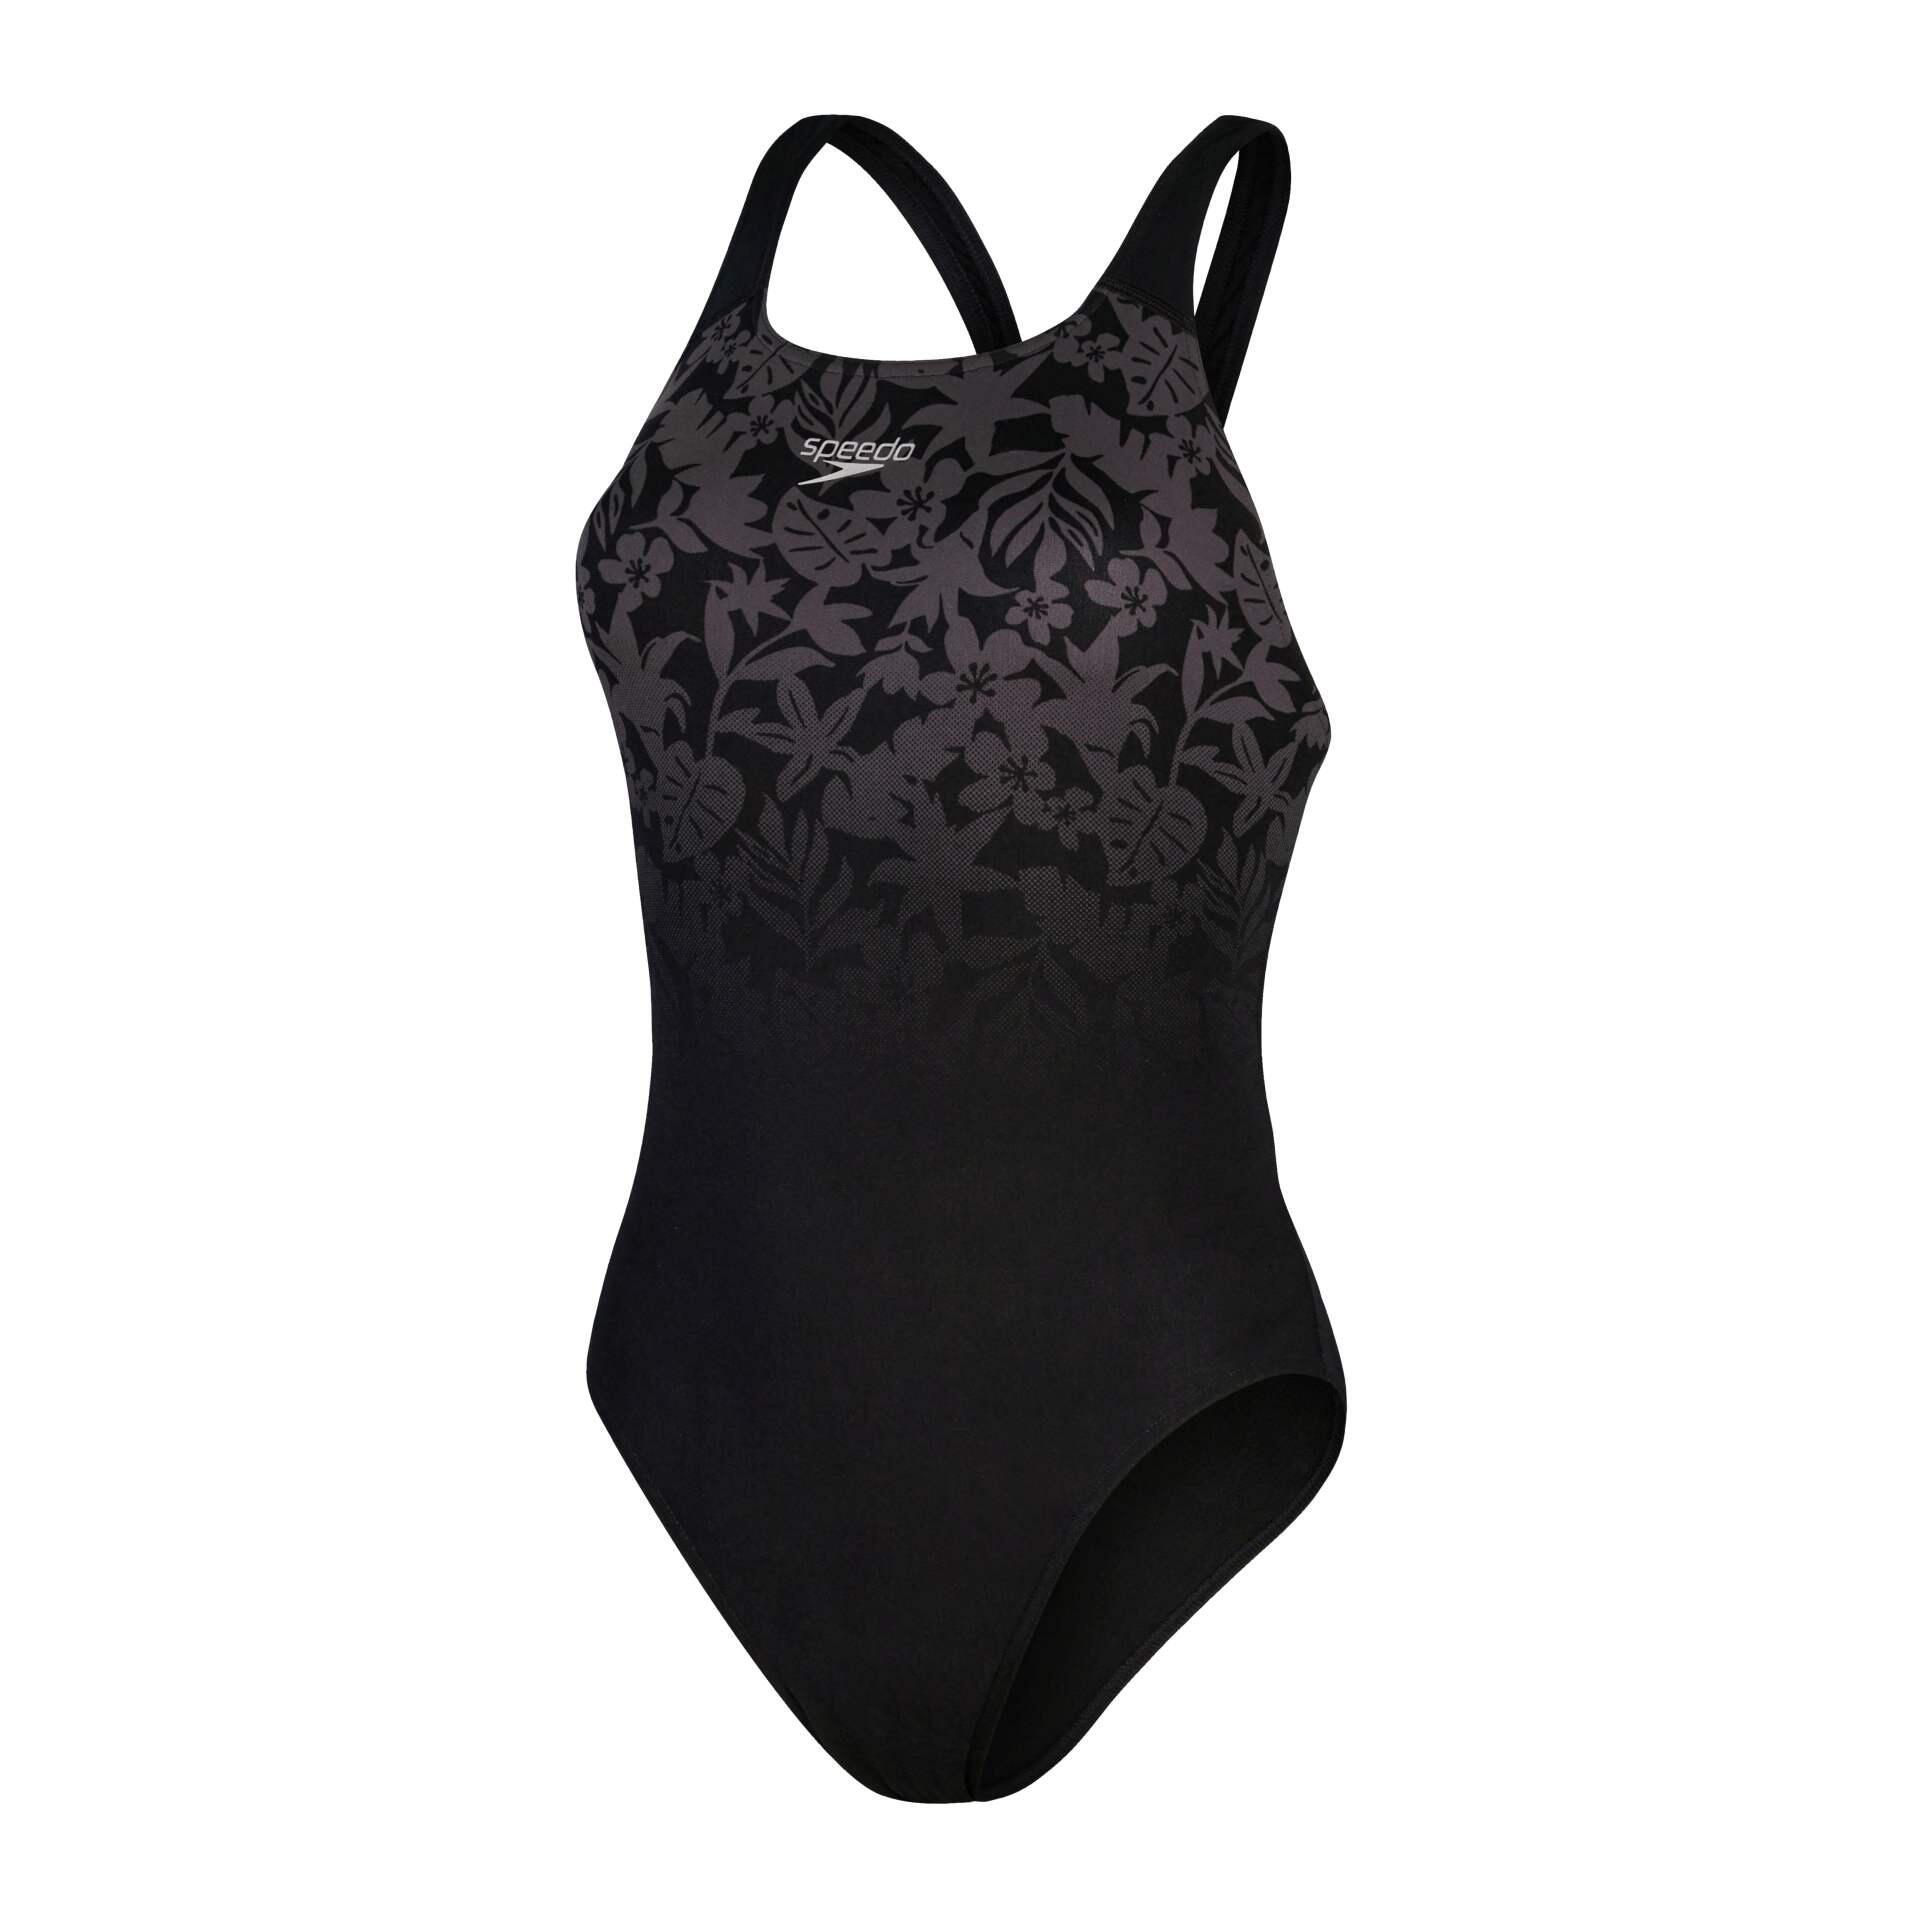 SPEEDO Speedo Placement Powerback Swimsuit - Black/ USA Charcoal